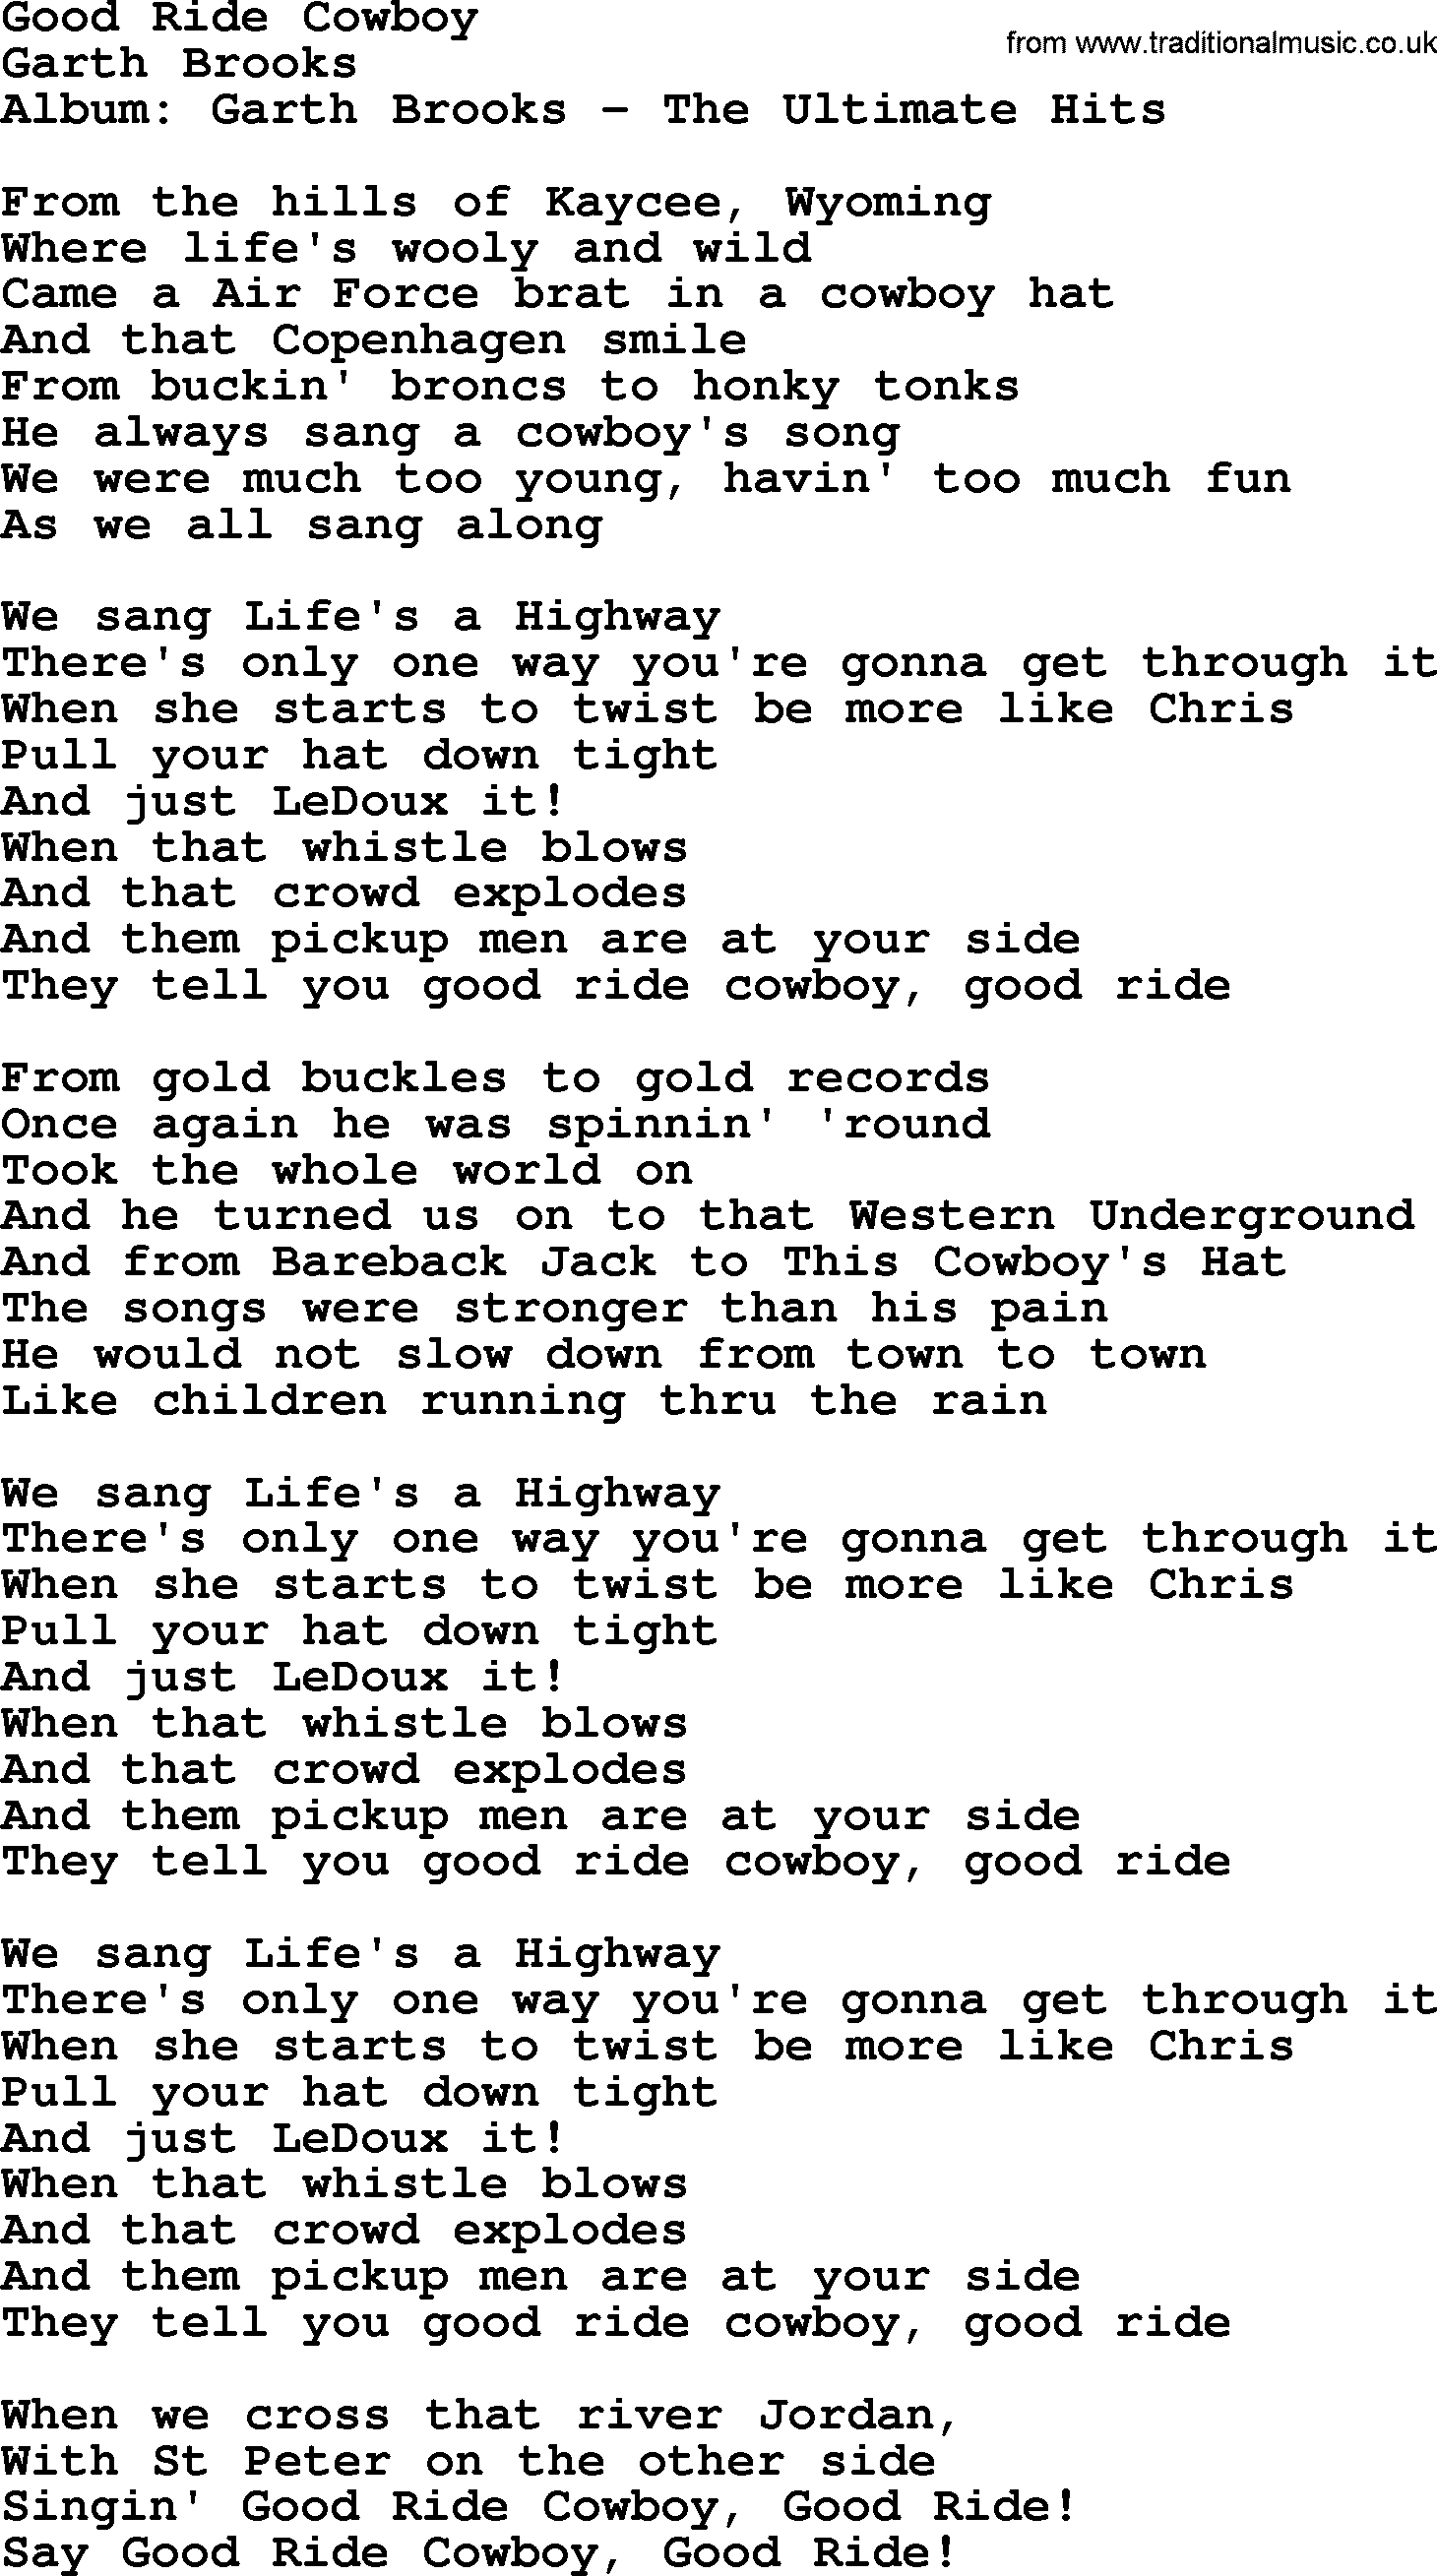 Garth Brooks song: Good Ride Cowboy, lyrics